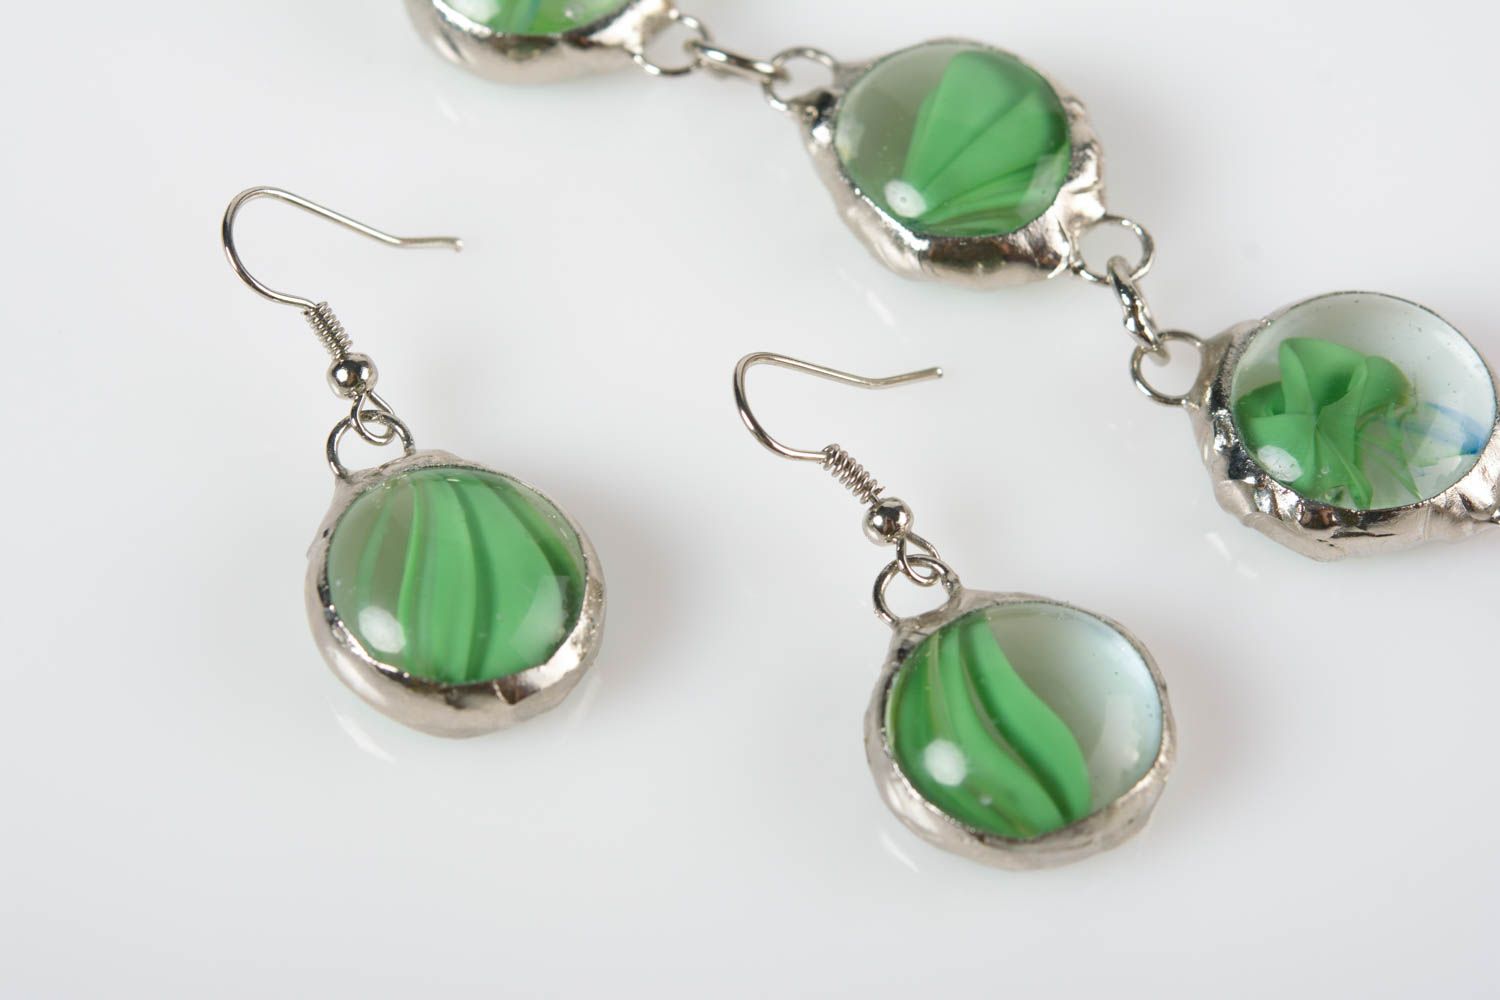 Handmade green glass and metal designer jewelry set wrist bracelet and earrings photo 4